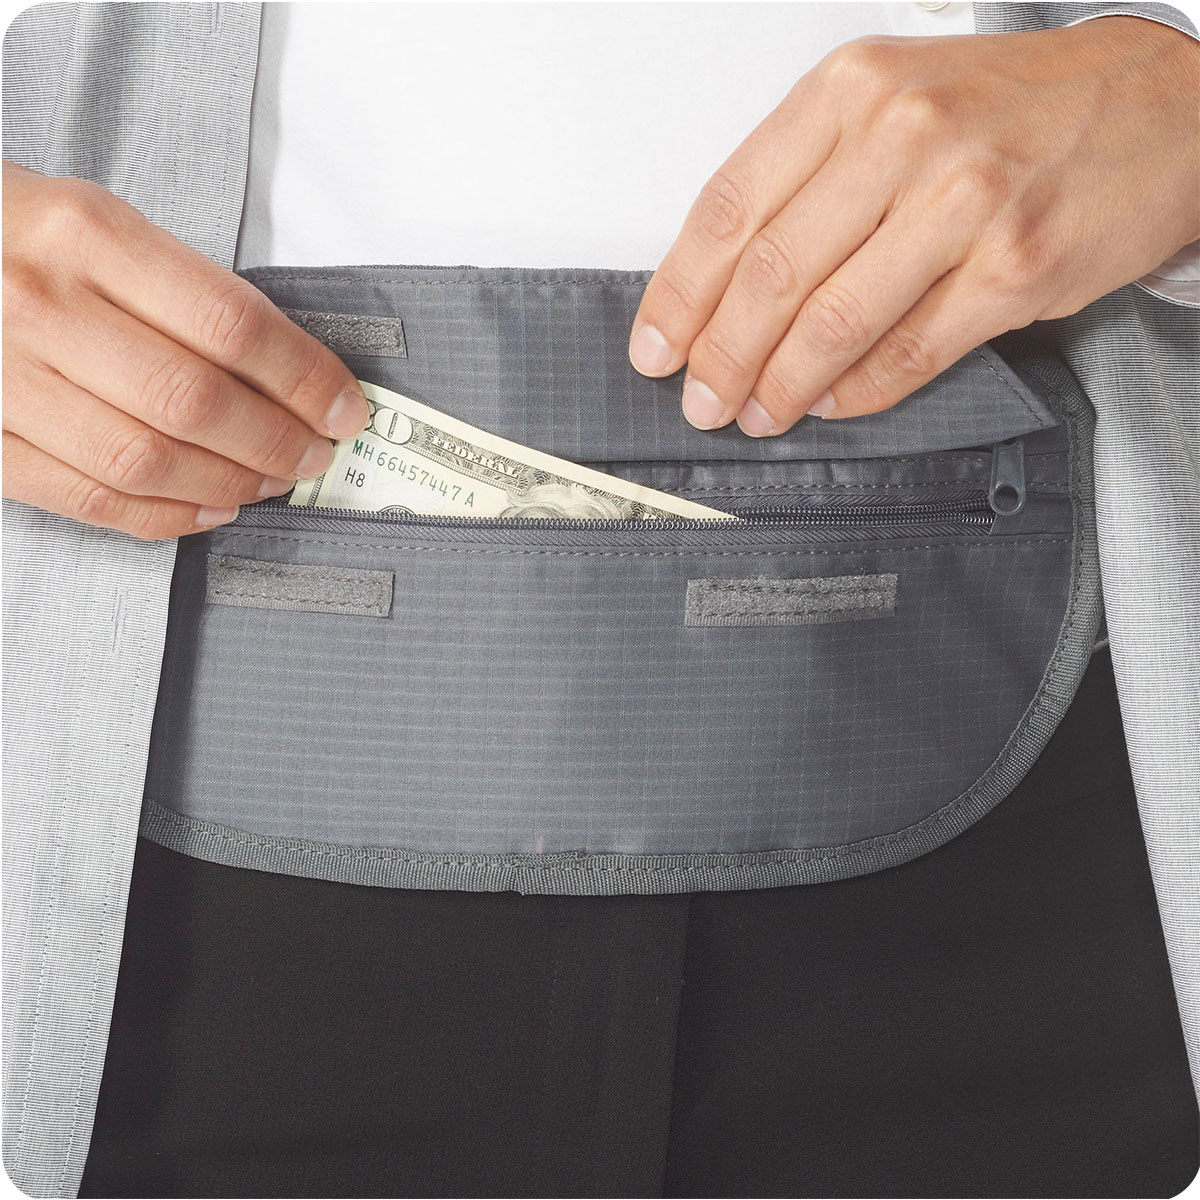 Boxiki Travel Beige Money Belt with RFID Sleeves Set Hong Kong